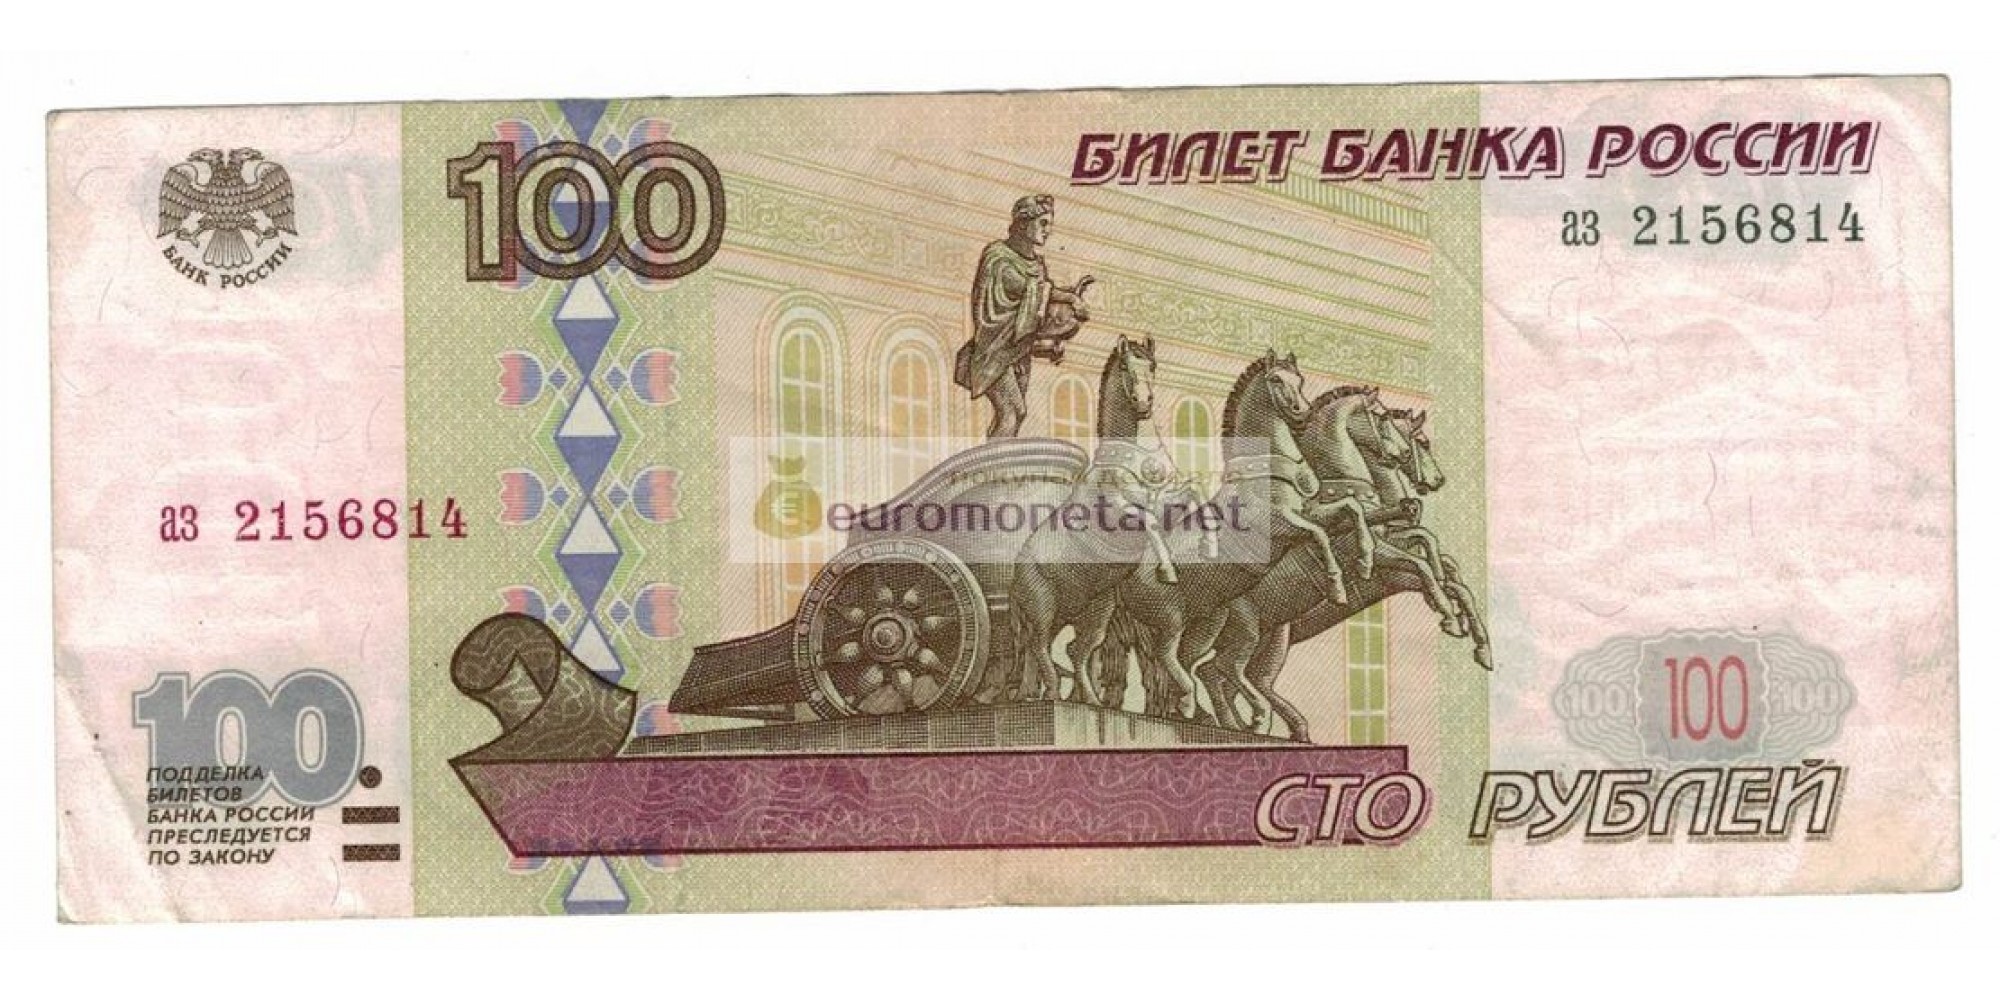 Россия 100 рублей 1997 год без модификации серия аз 2156814